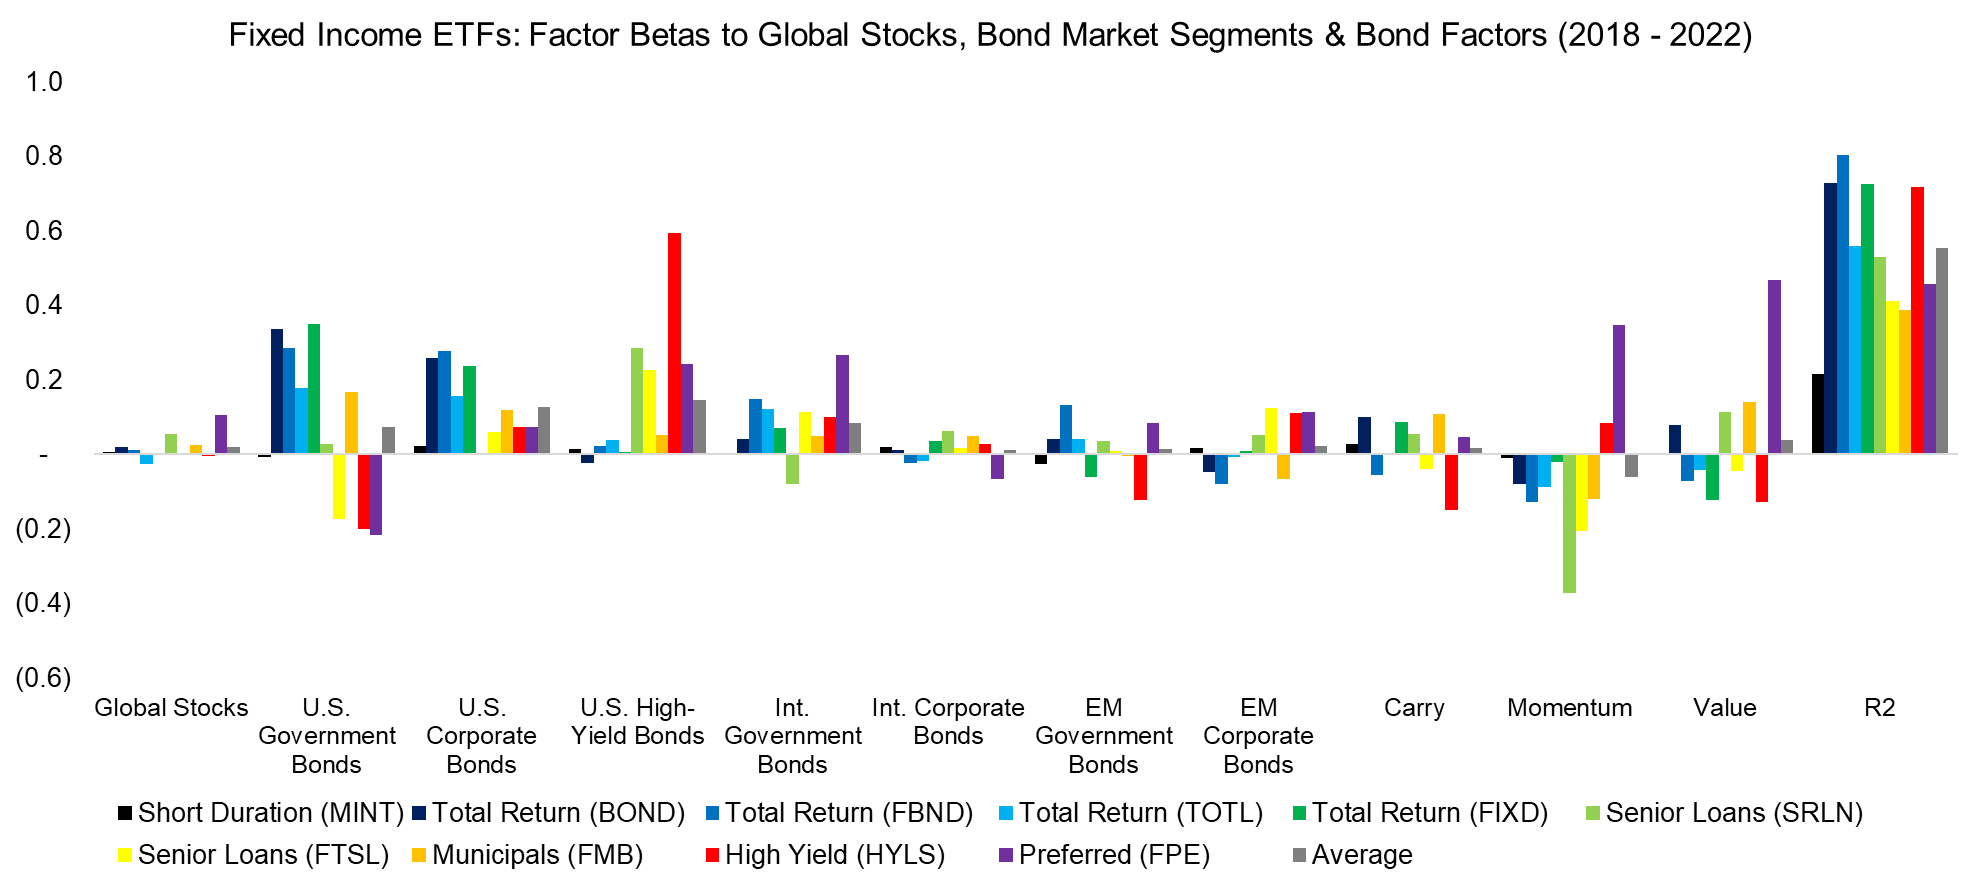 Fixed Income ETFs Factor Betas to Global Stocks, Bond Market Segments & Bond Factors (2018 - 2022)